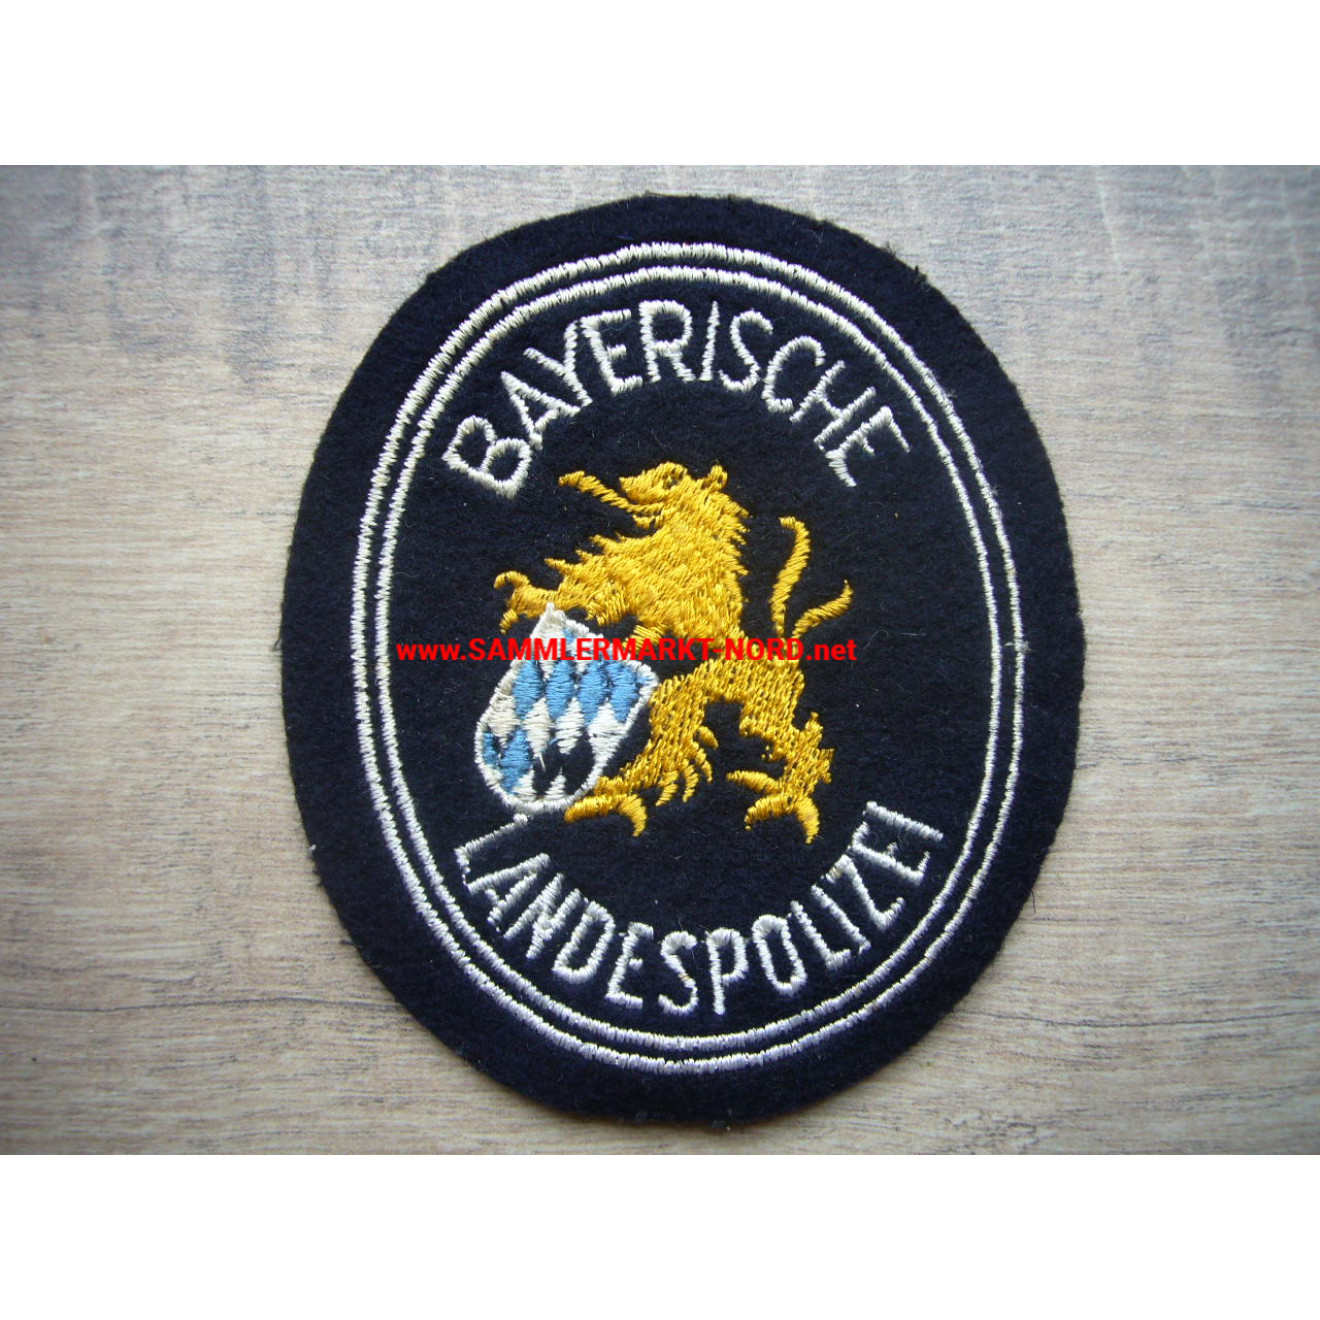 Bavarian state police - uniform badge